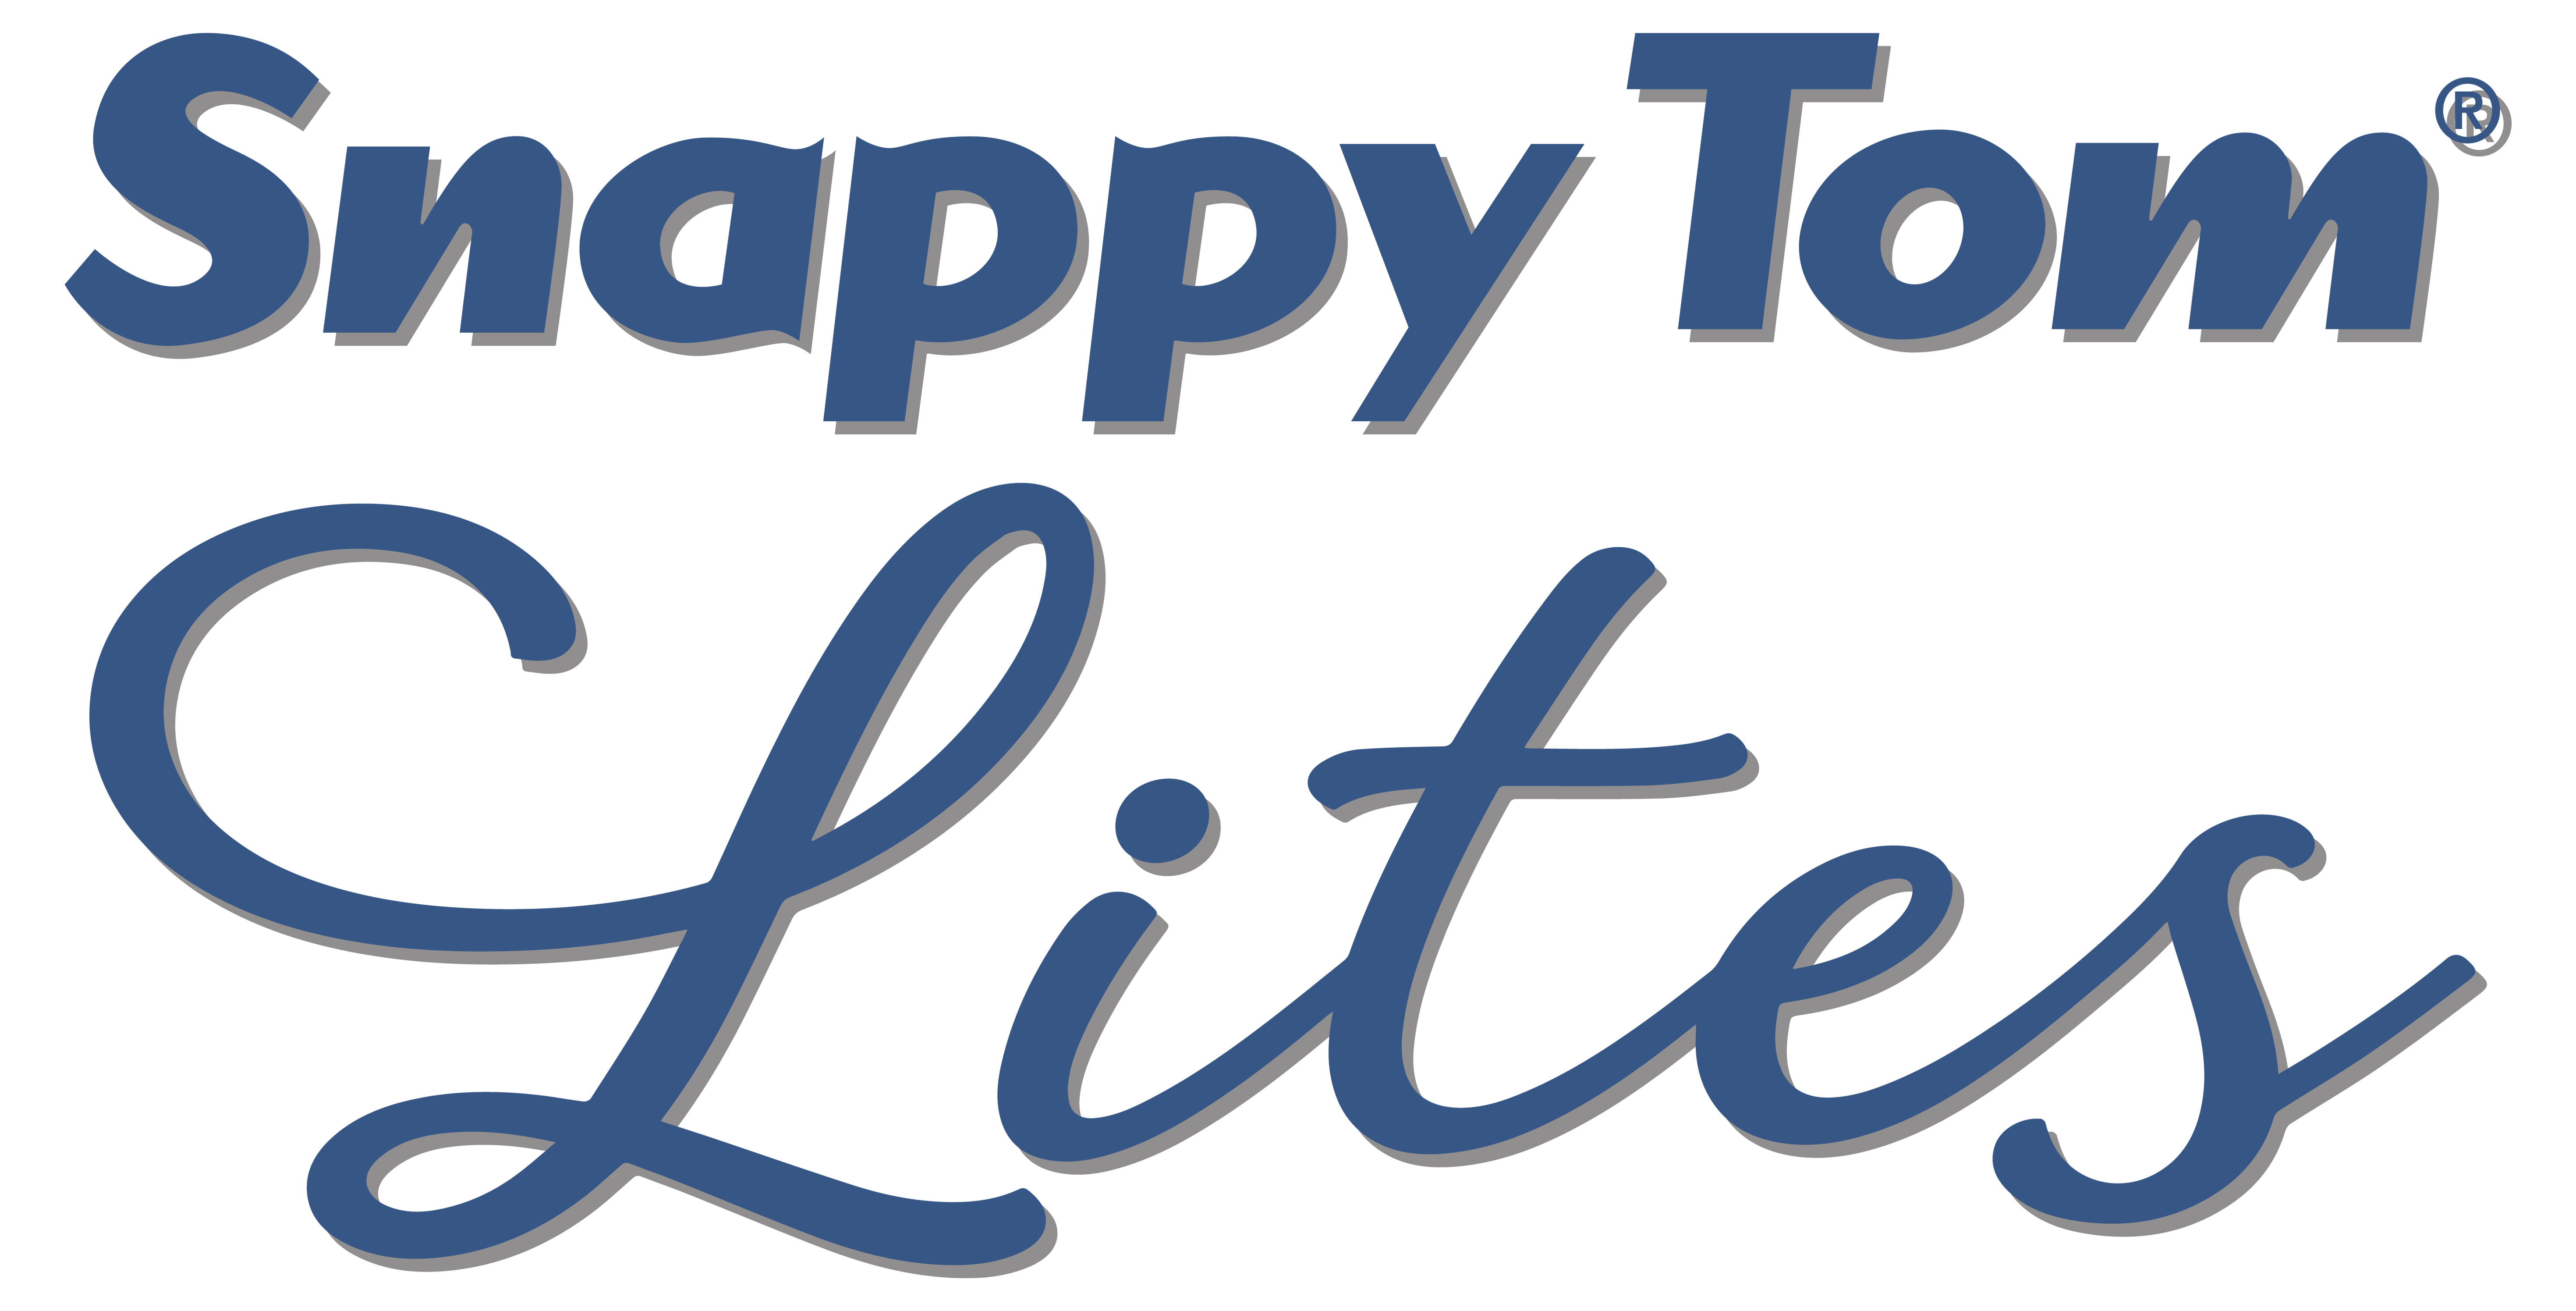 Snappy Tom Lites Logo Image